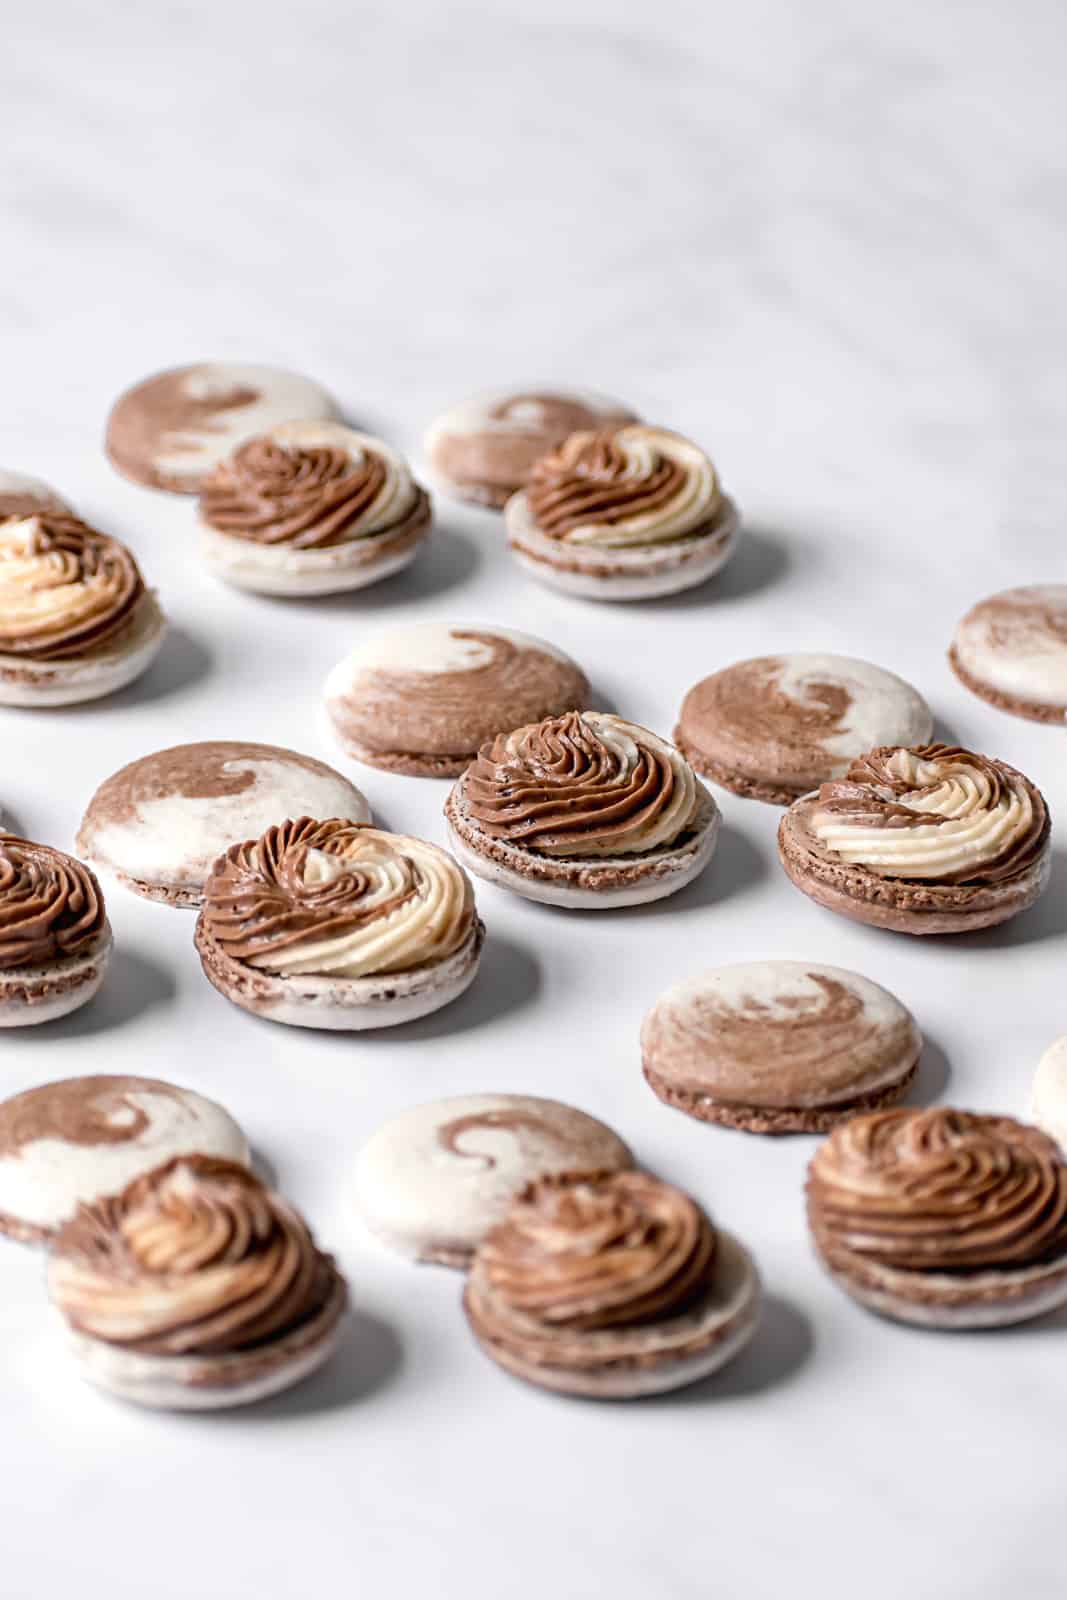 Chocolate & Vanilla Swirled Macarons filled with swiss meringue buttercream on marble.